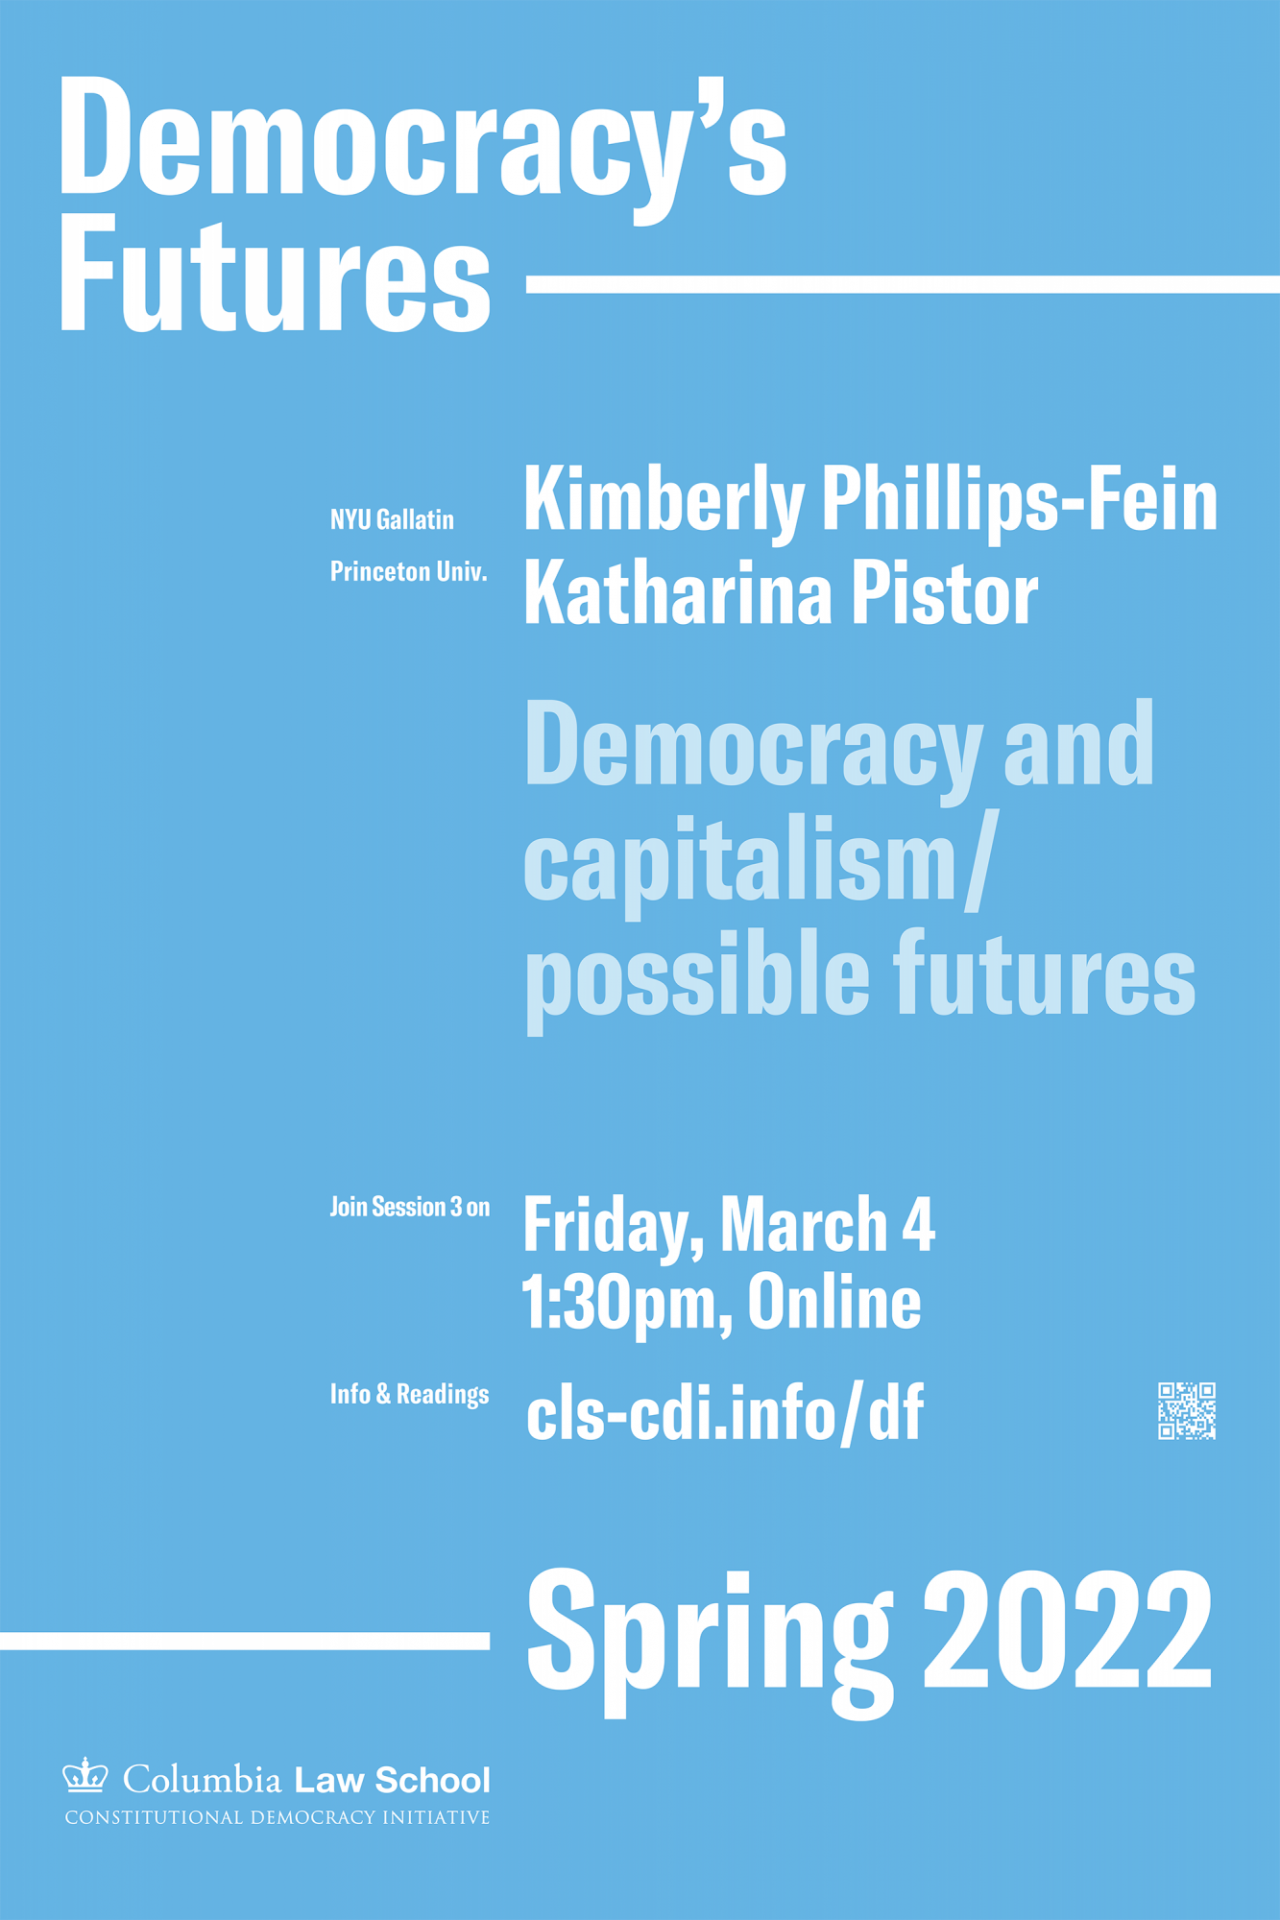 Democracy's Futures - Session 3